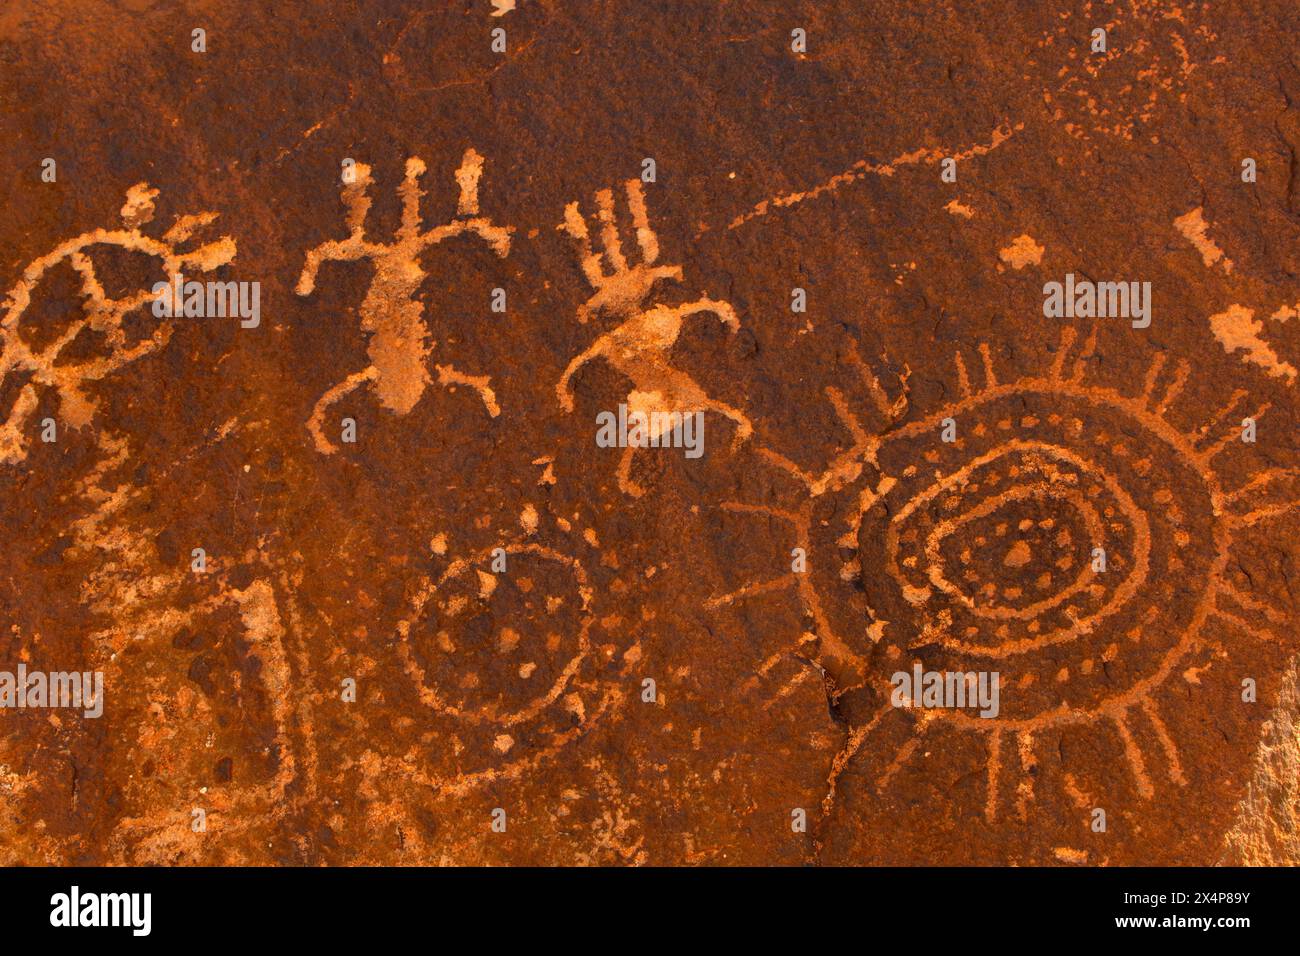 Petroglyphs, Little Black Mountain Petroglyph Site, Arizona Strip Bureau of Land Management, Arizona Stock Photo